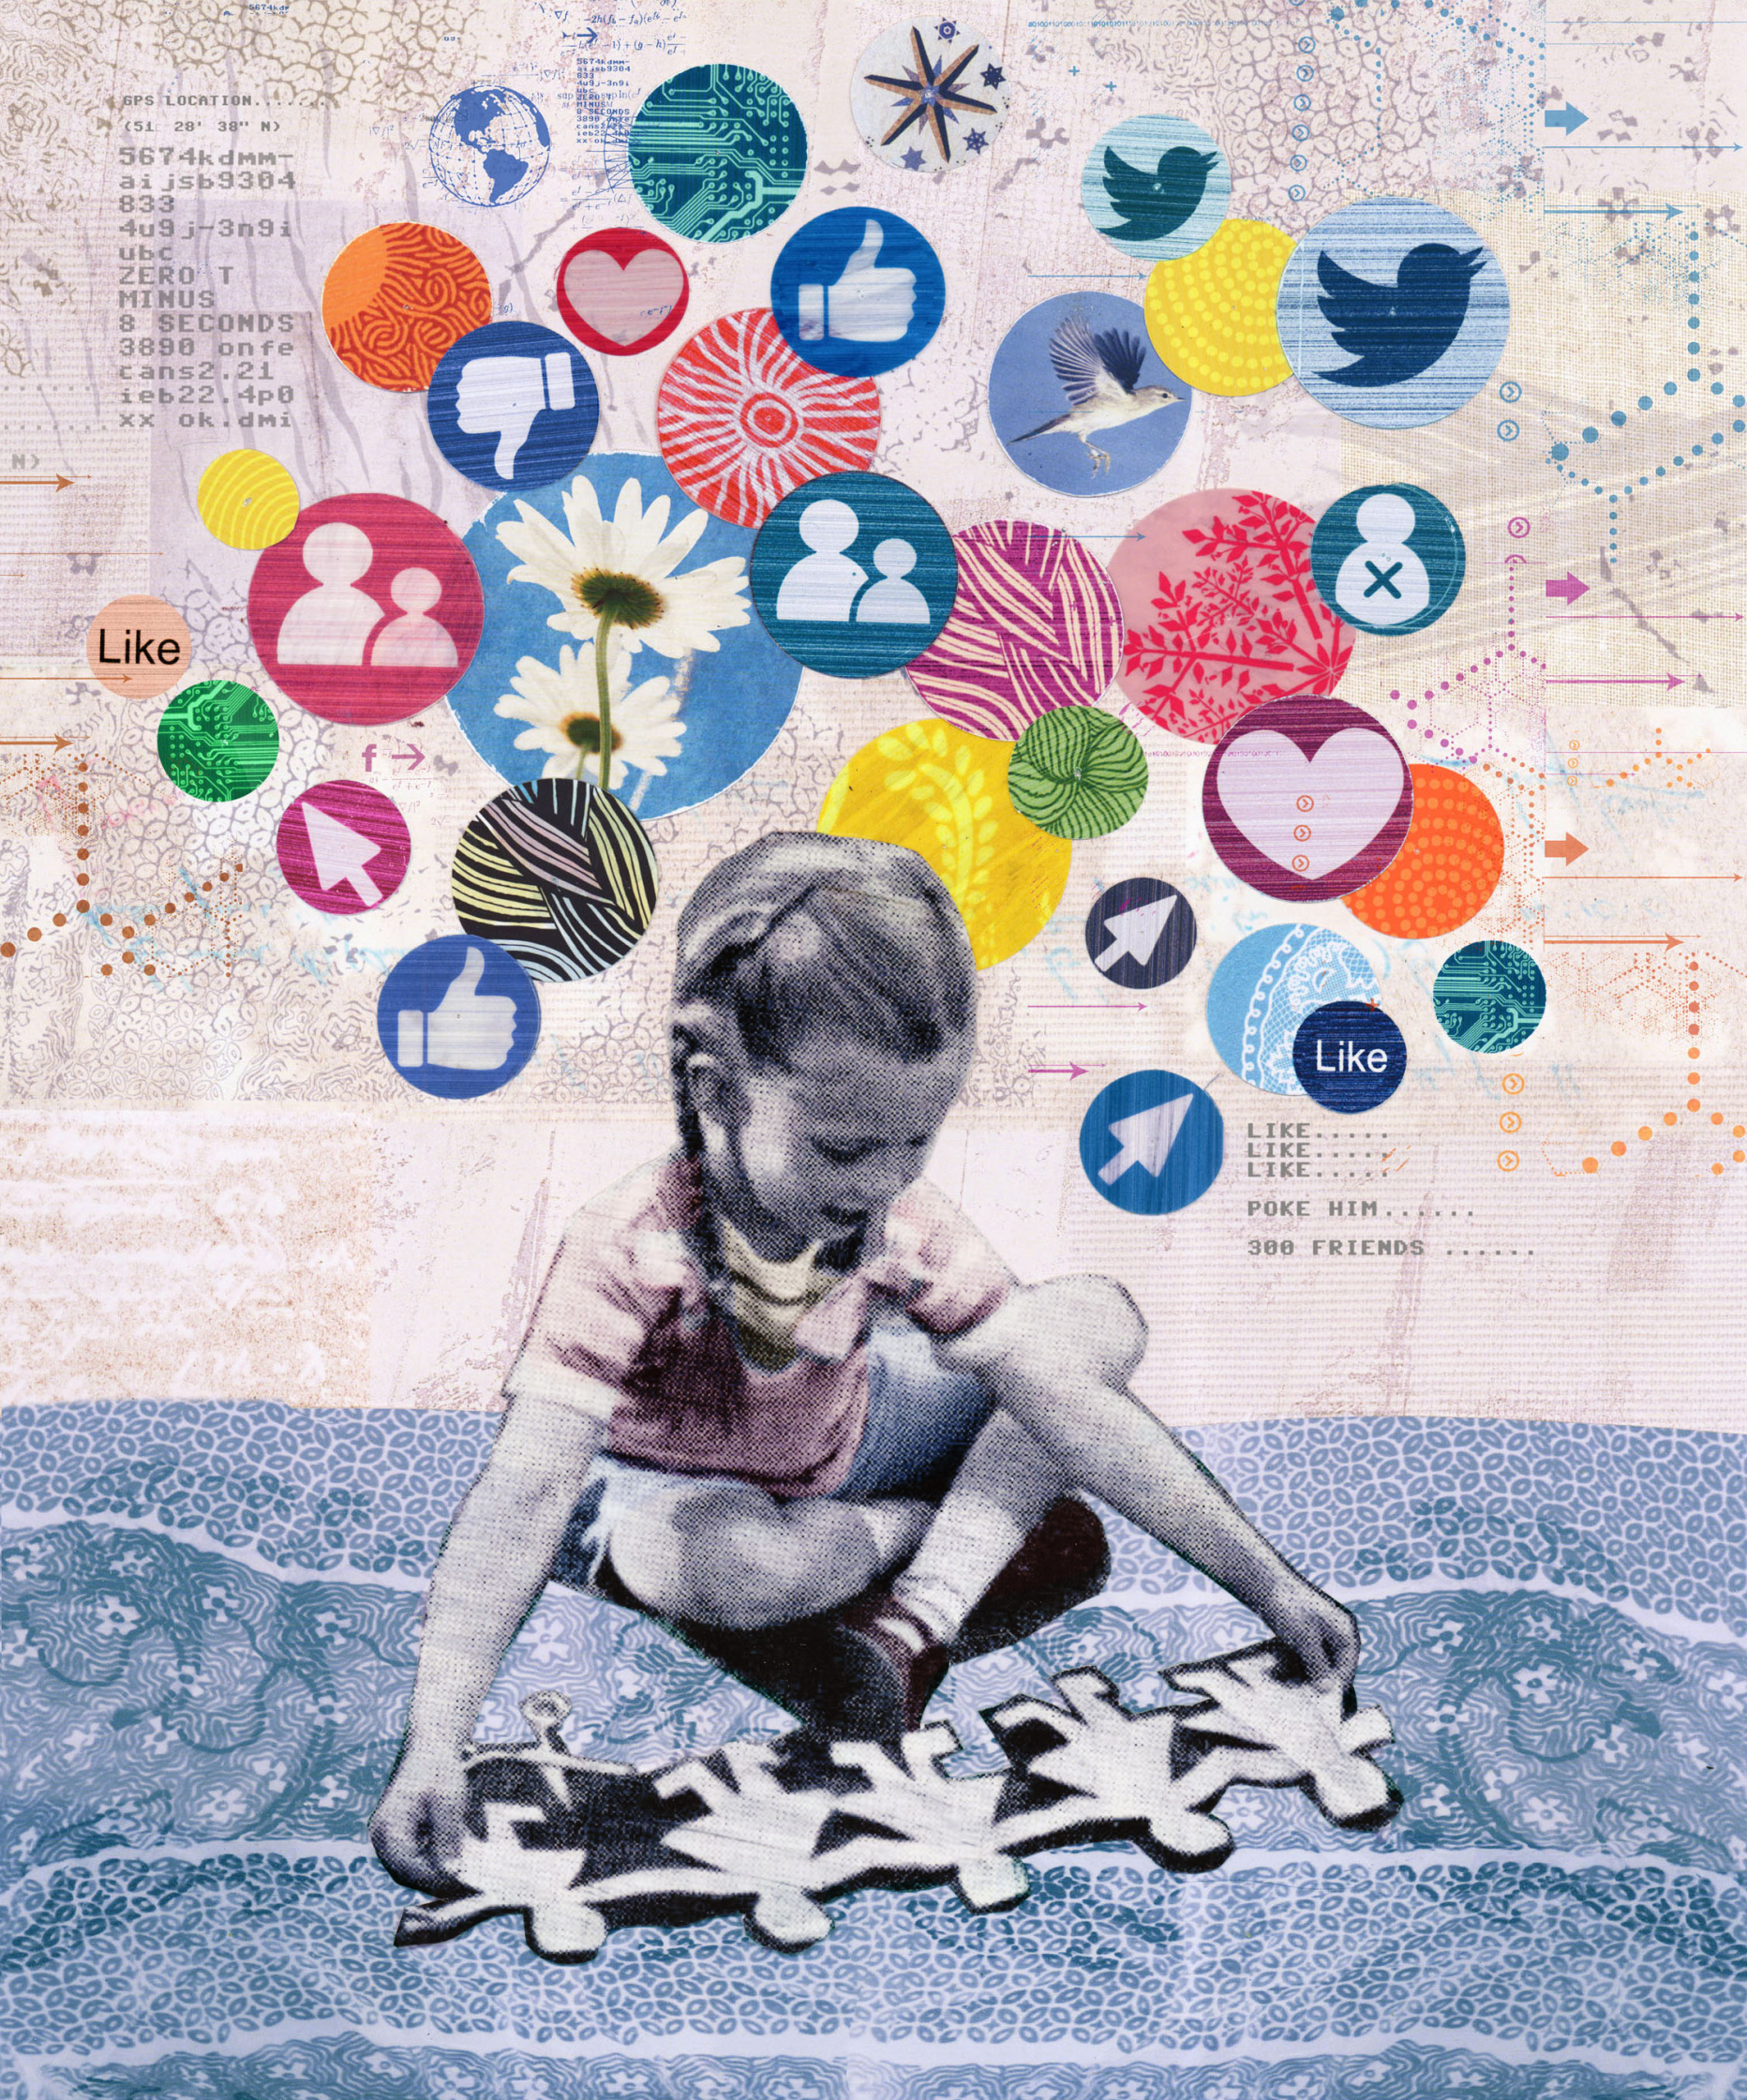 Alone Together Social Media Report Scientific American Magazine